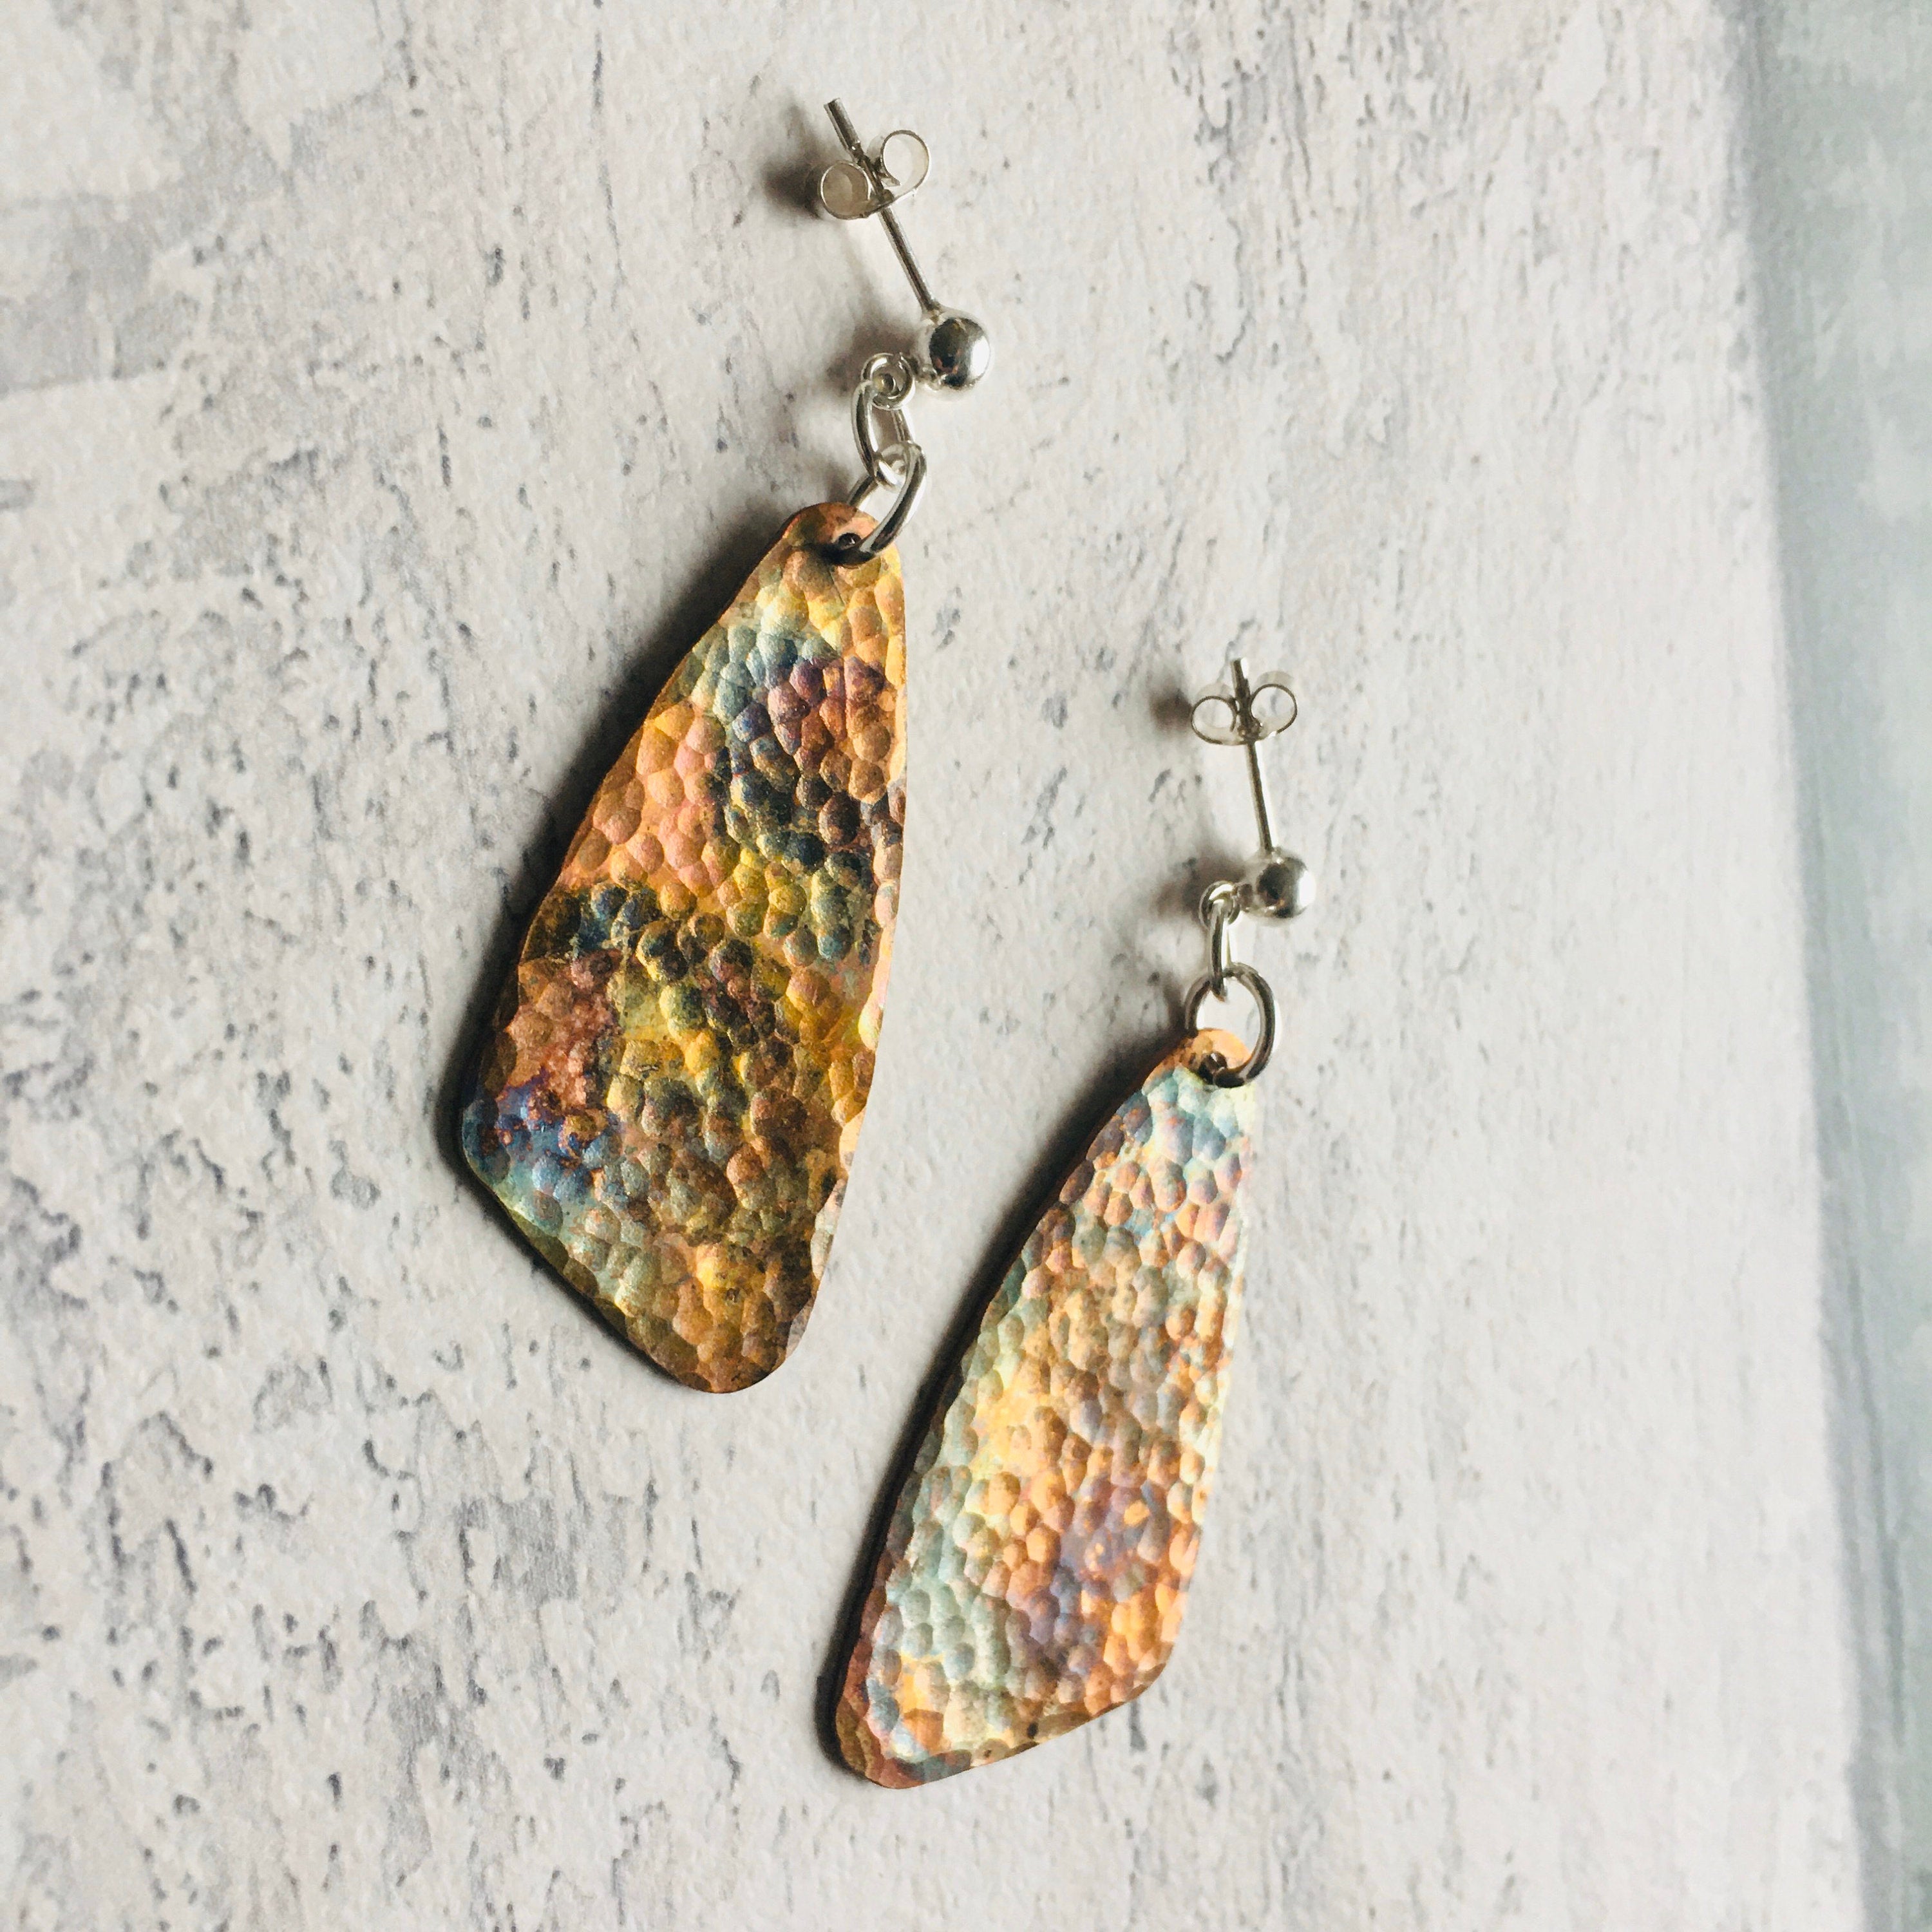 Drop earrings Patina Copper with silver ear findings.